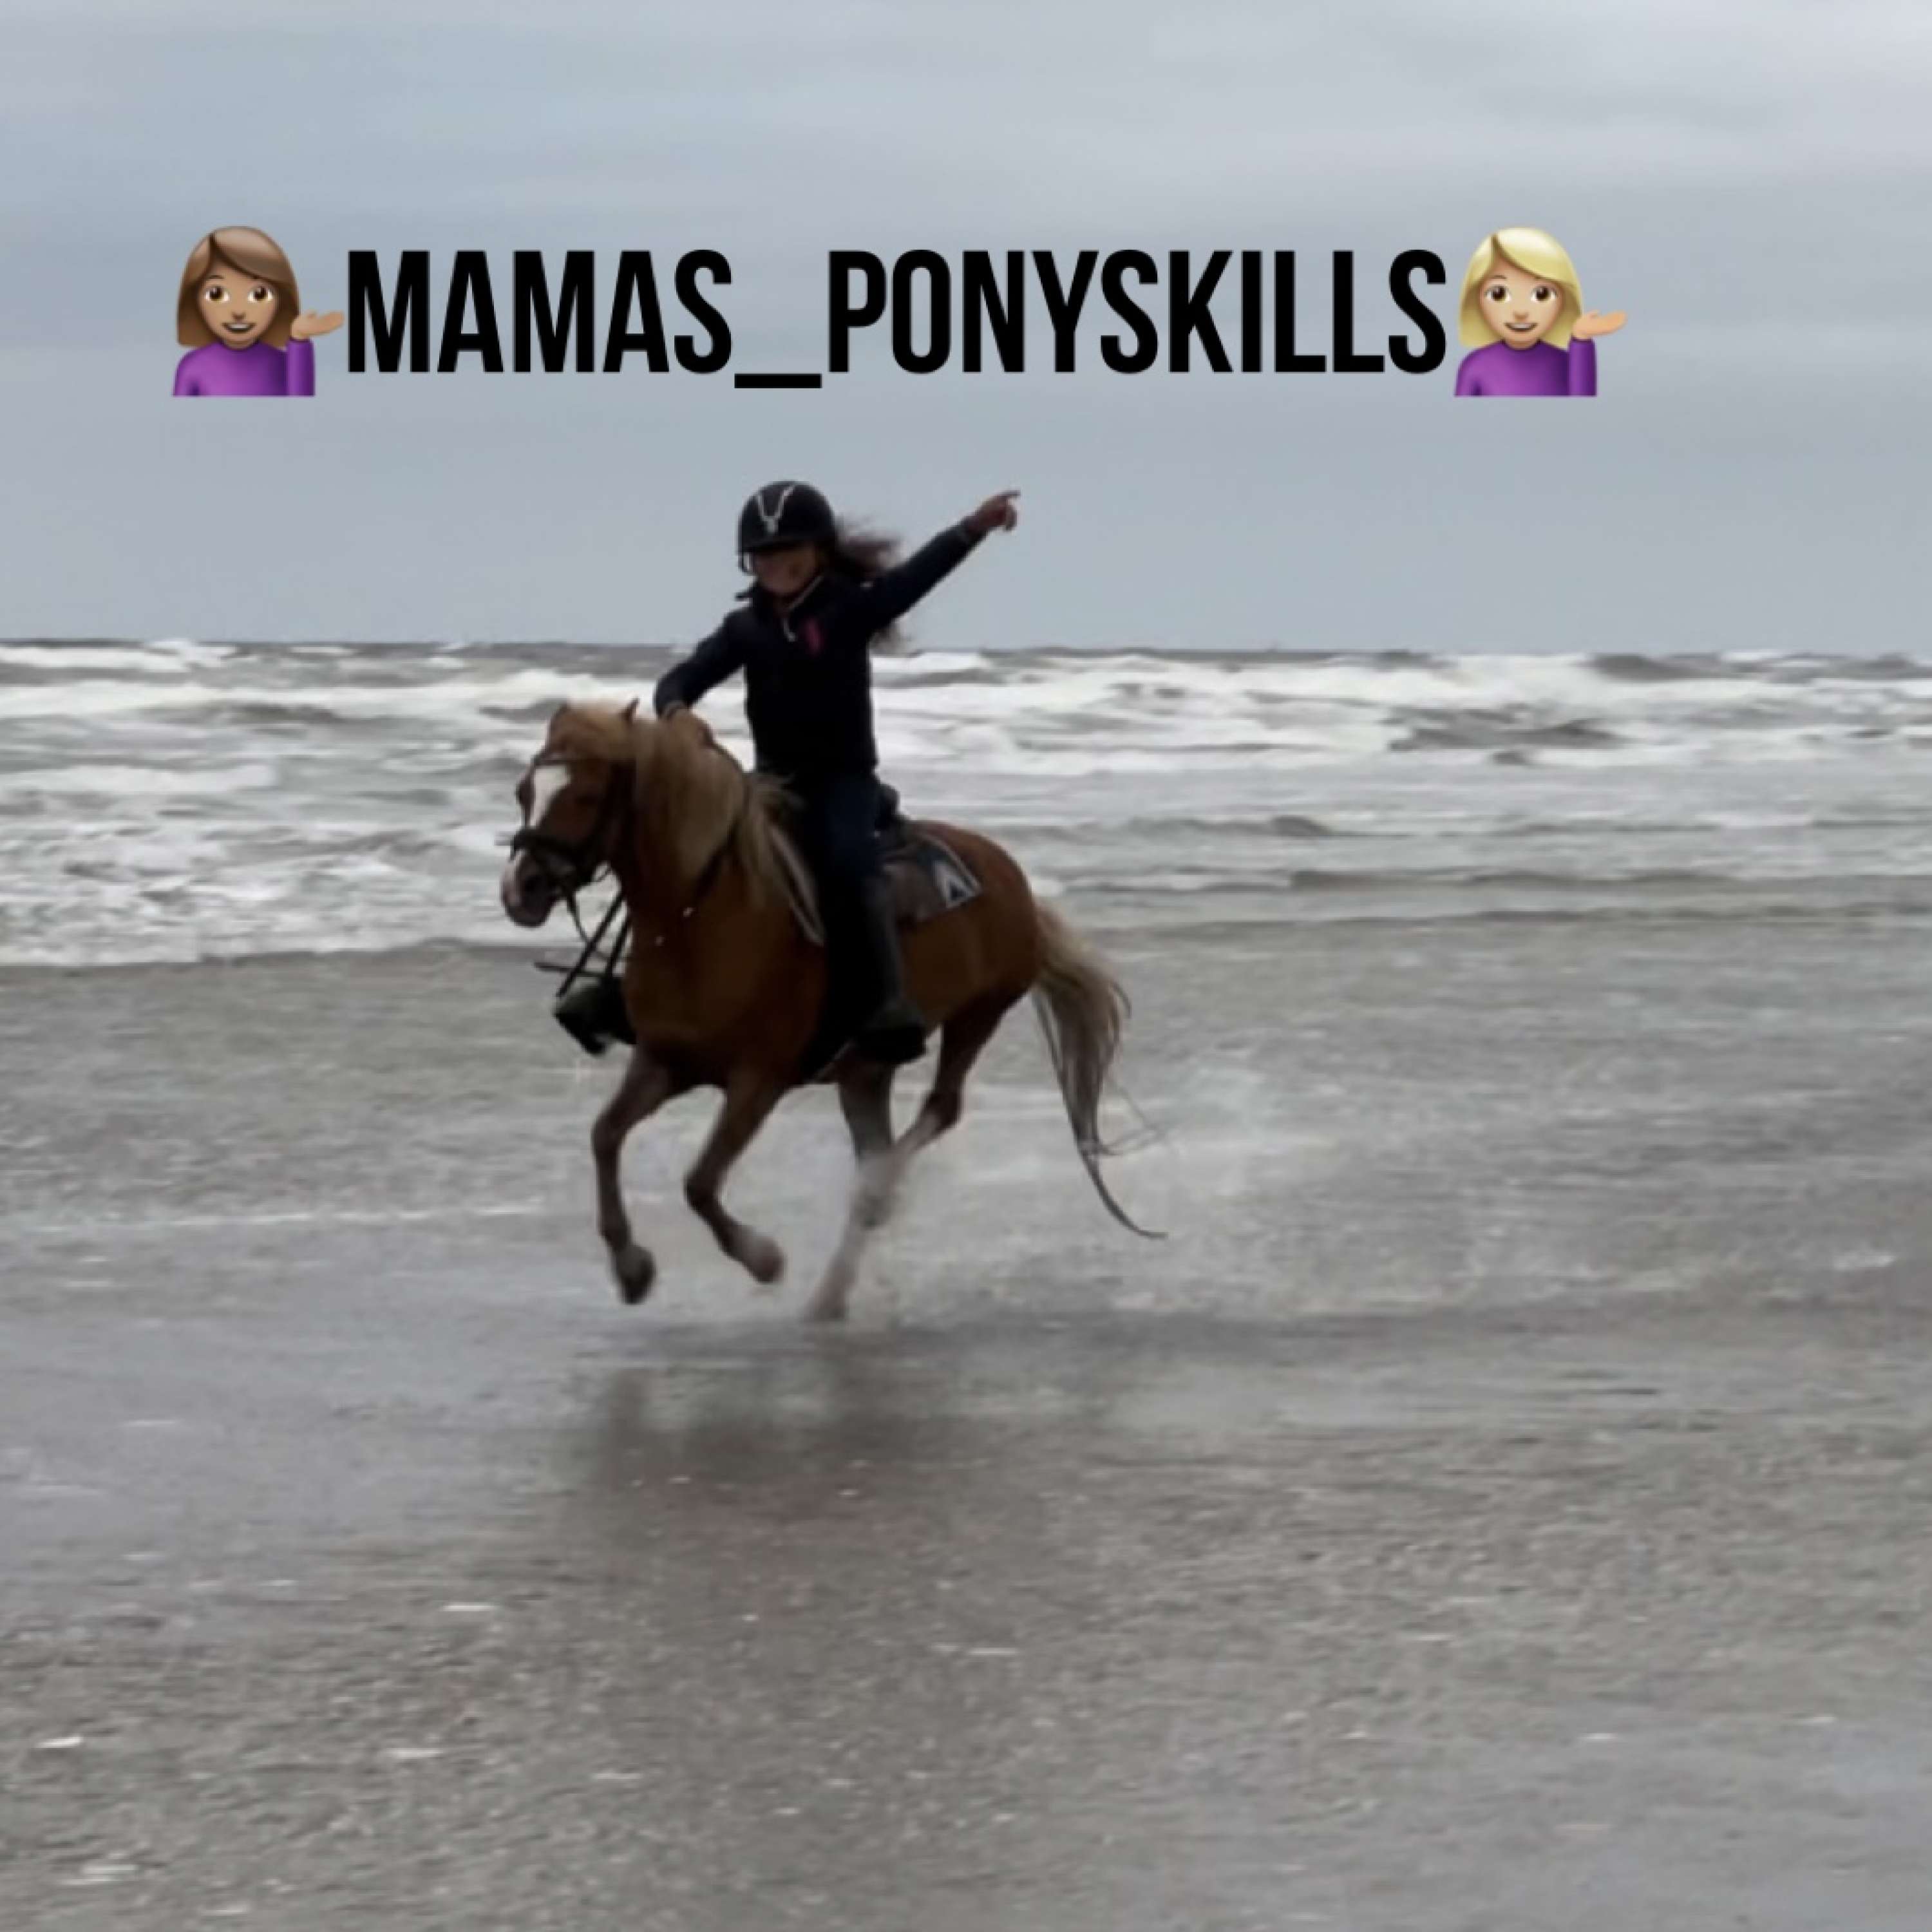 Mamas_Ponyskills logo